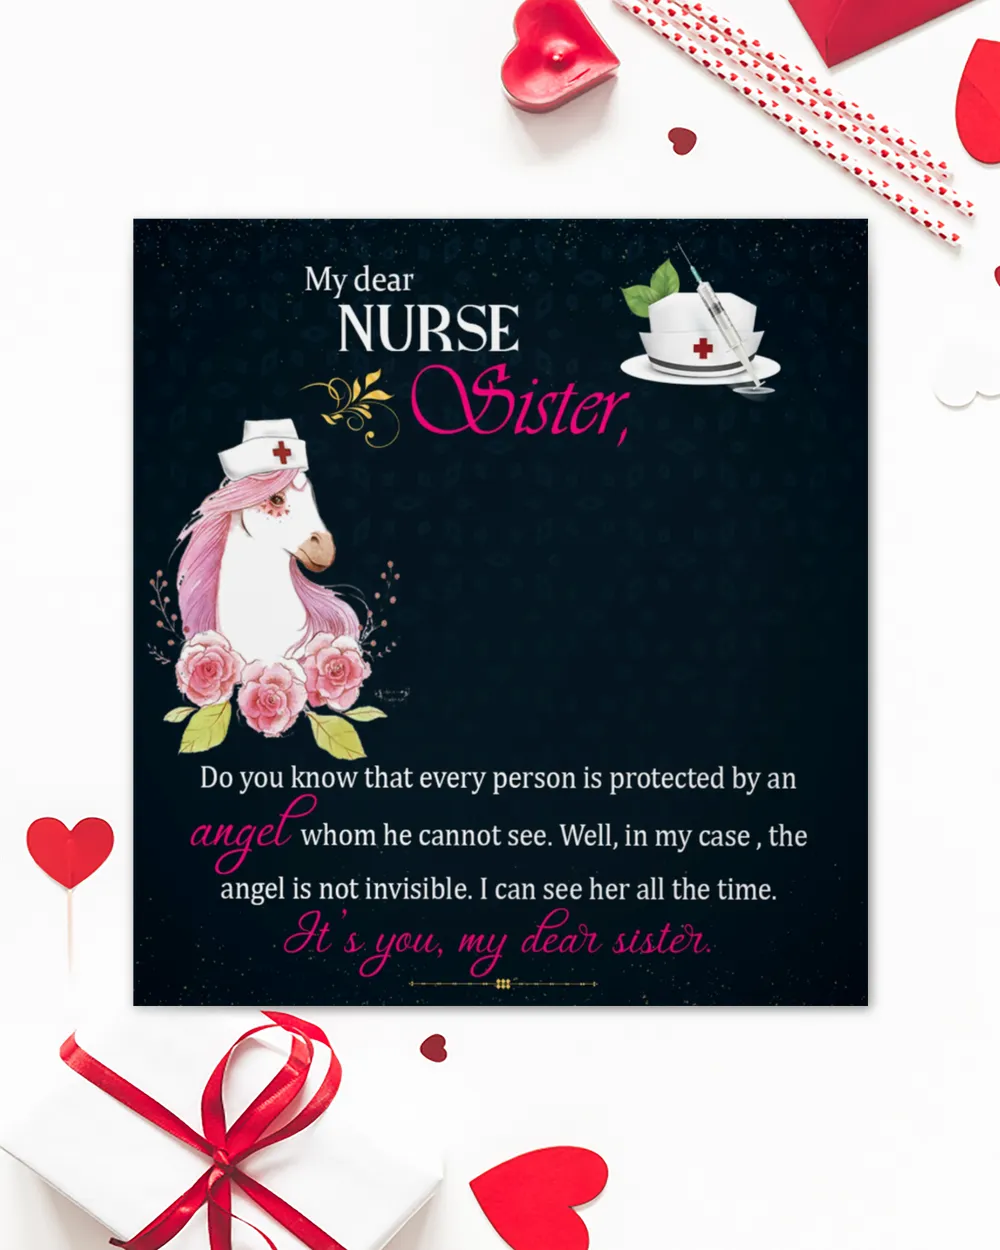 My dear nurse sister